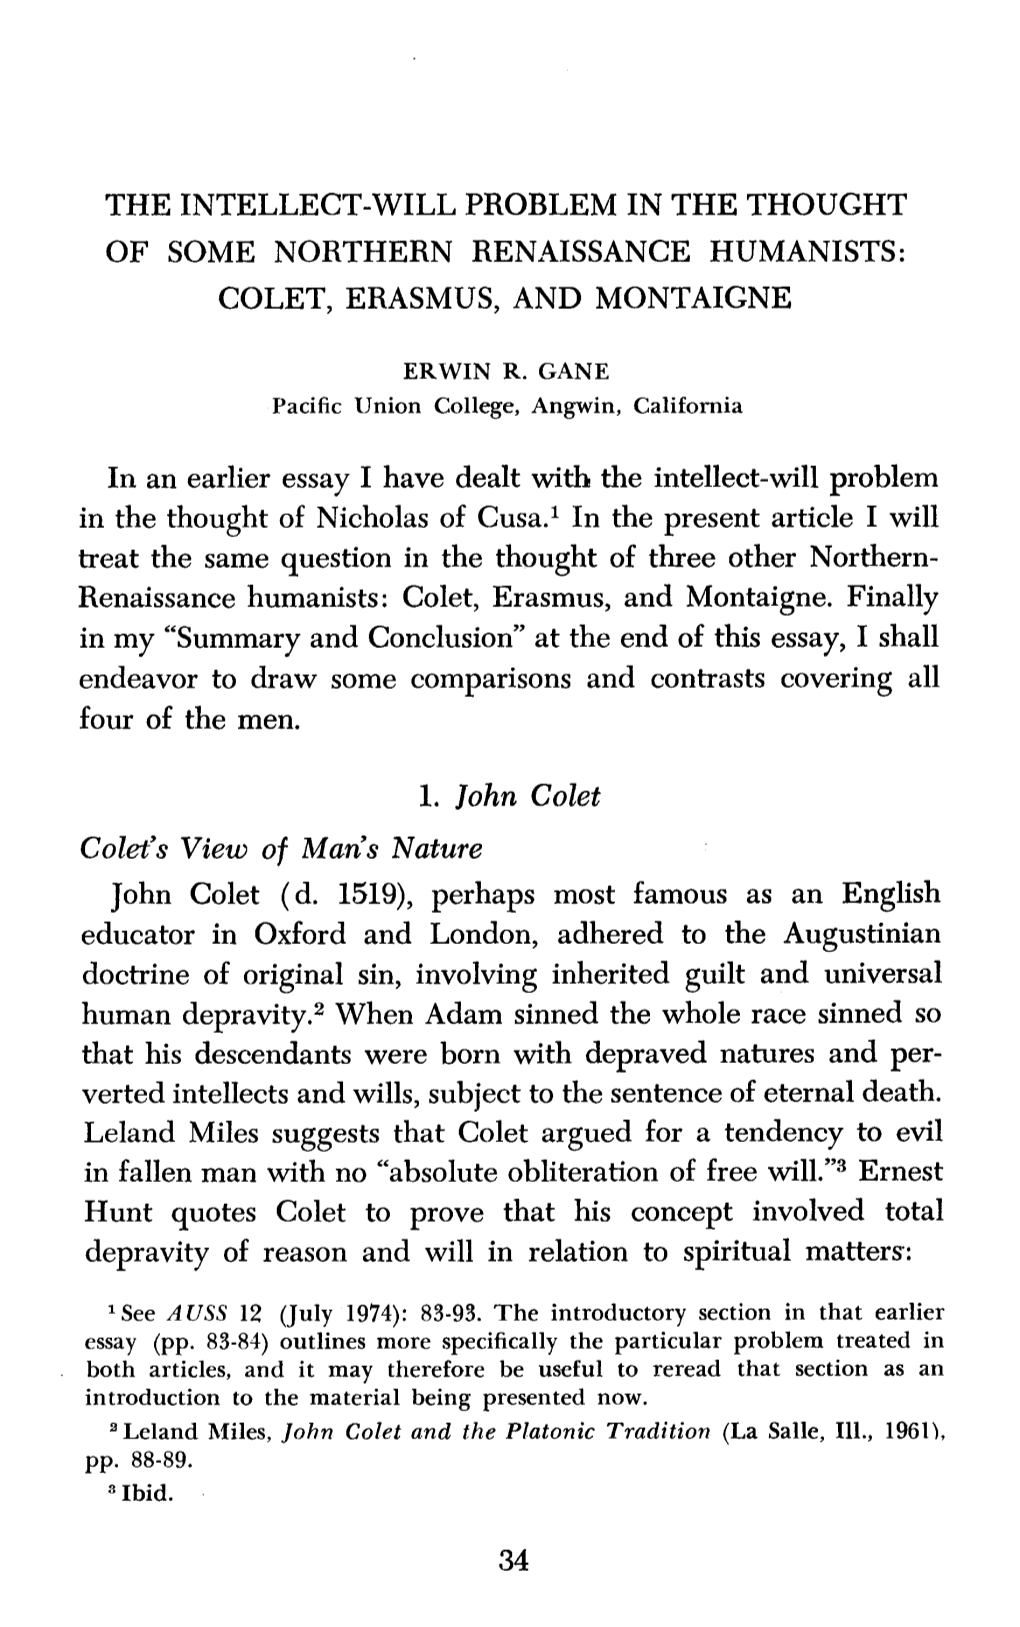 1. John Colet Colet's View of Man's Nature John Colet (D